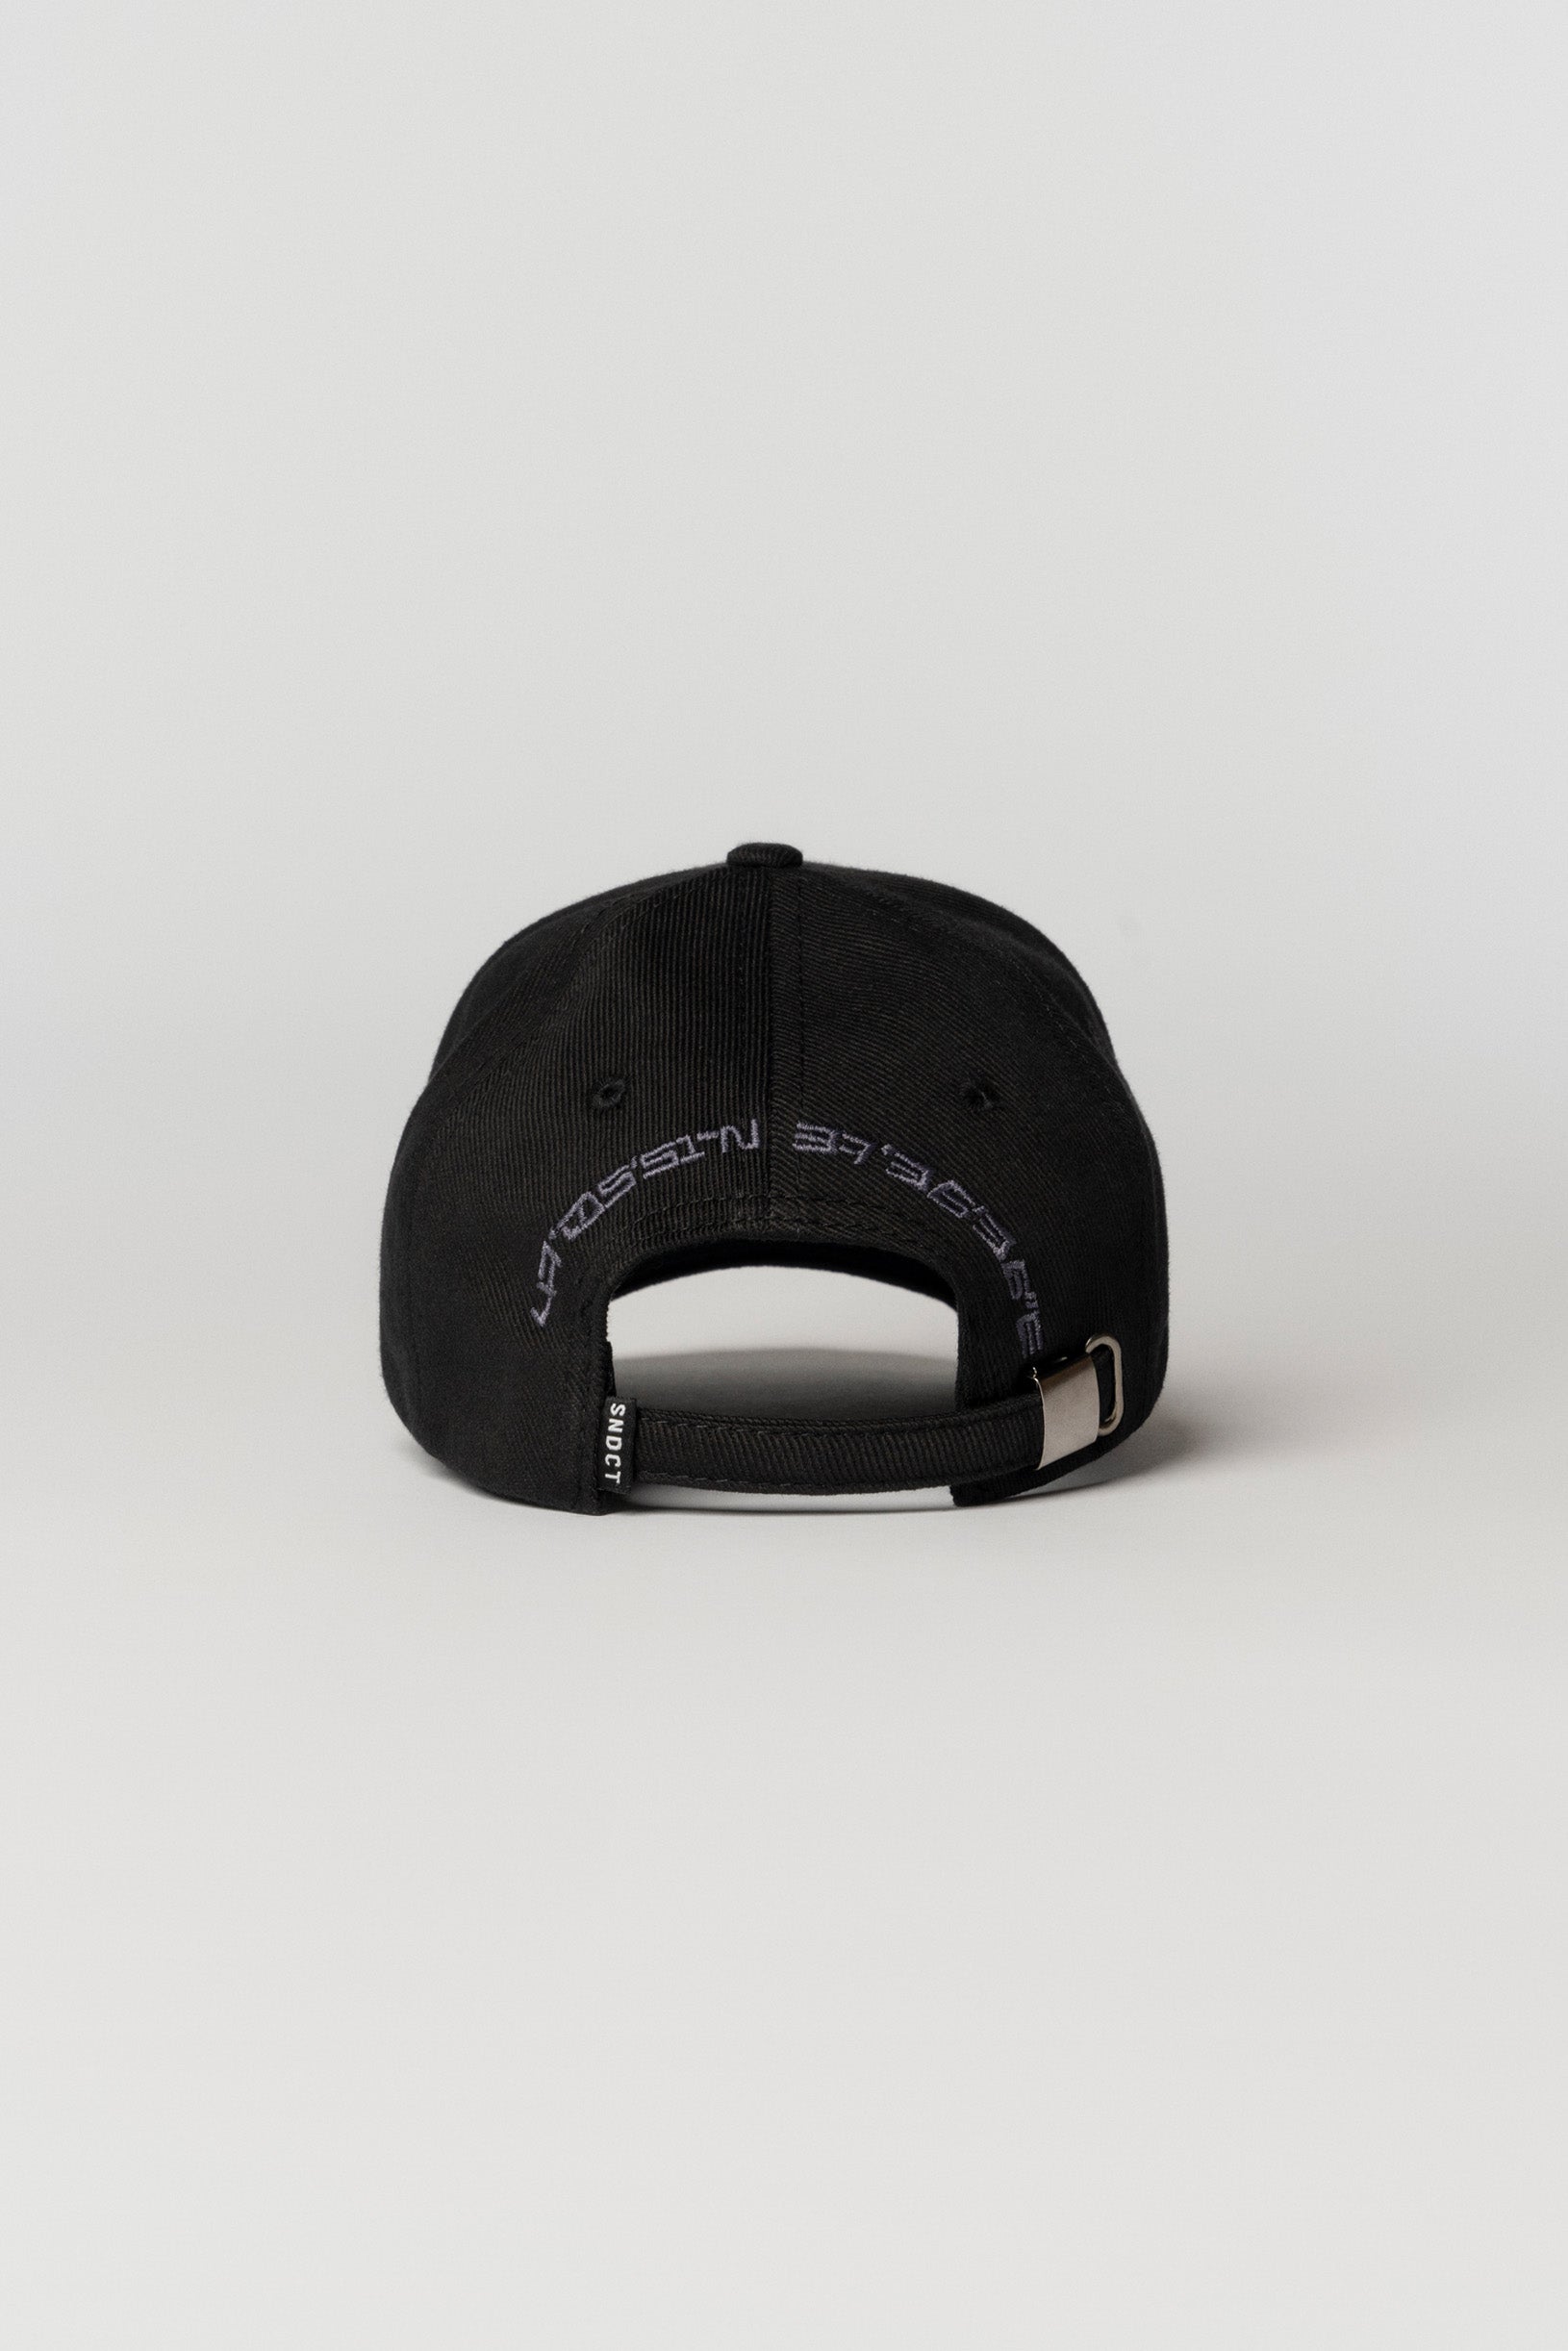 SNDCT x Azov One "Steel" cap black